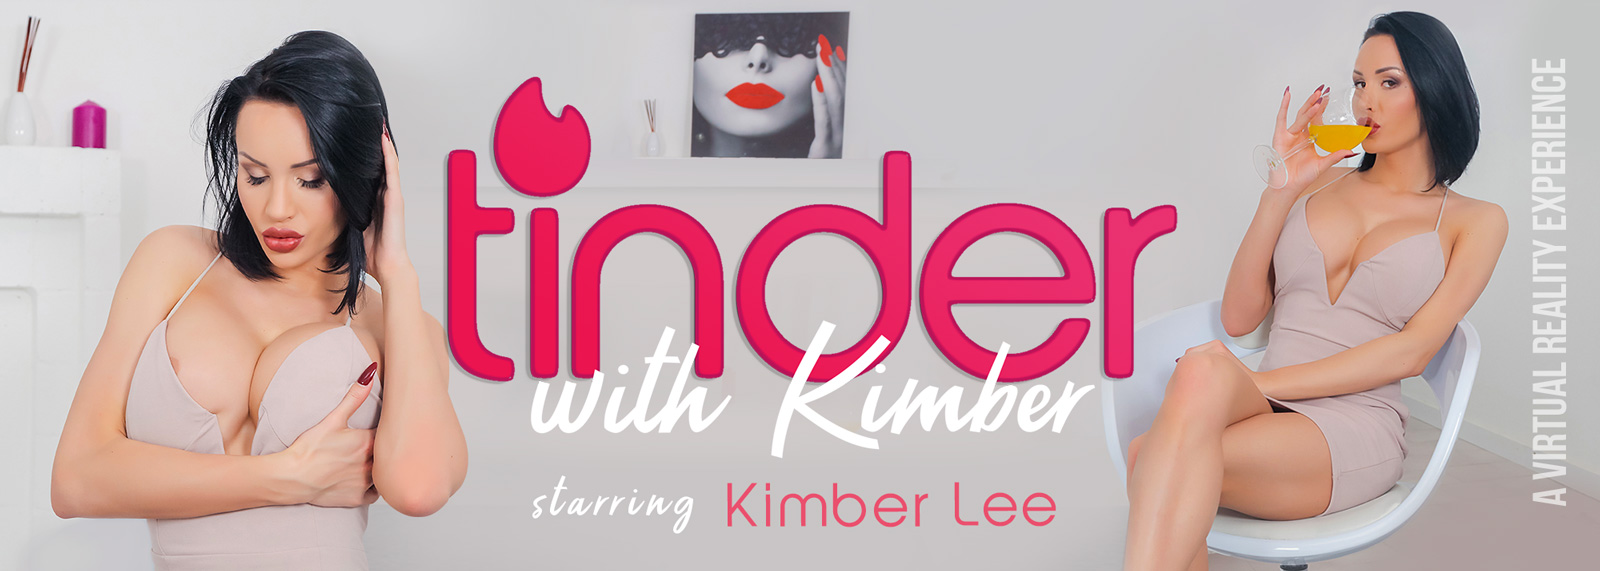 Tinder With Kimber - VR Porn Video, Starring: Kimber Lee VR